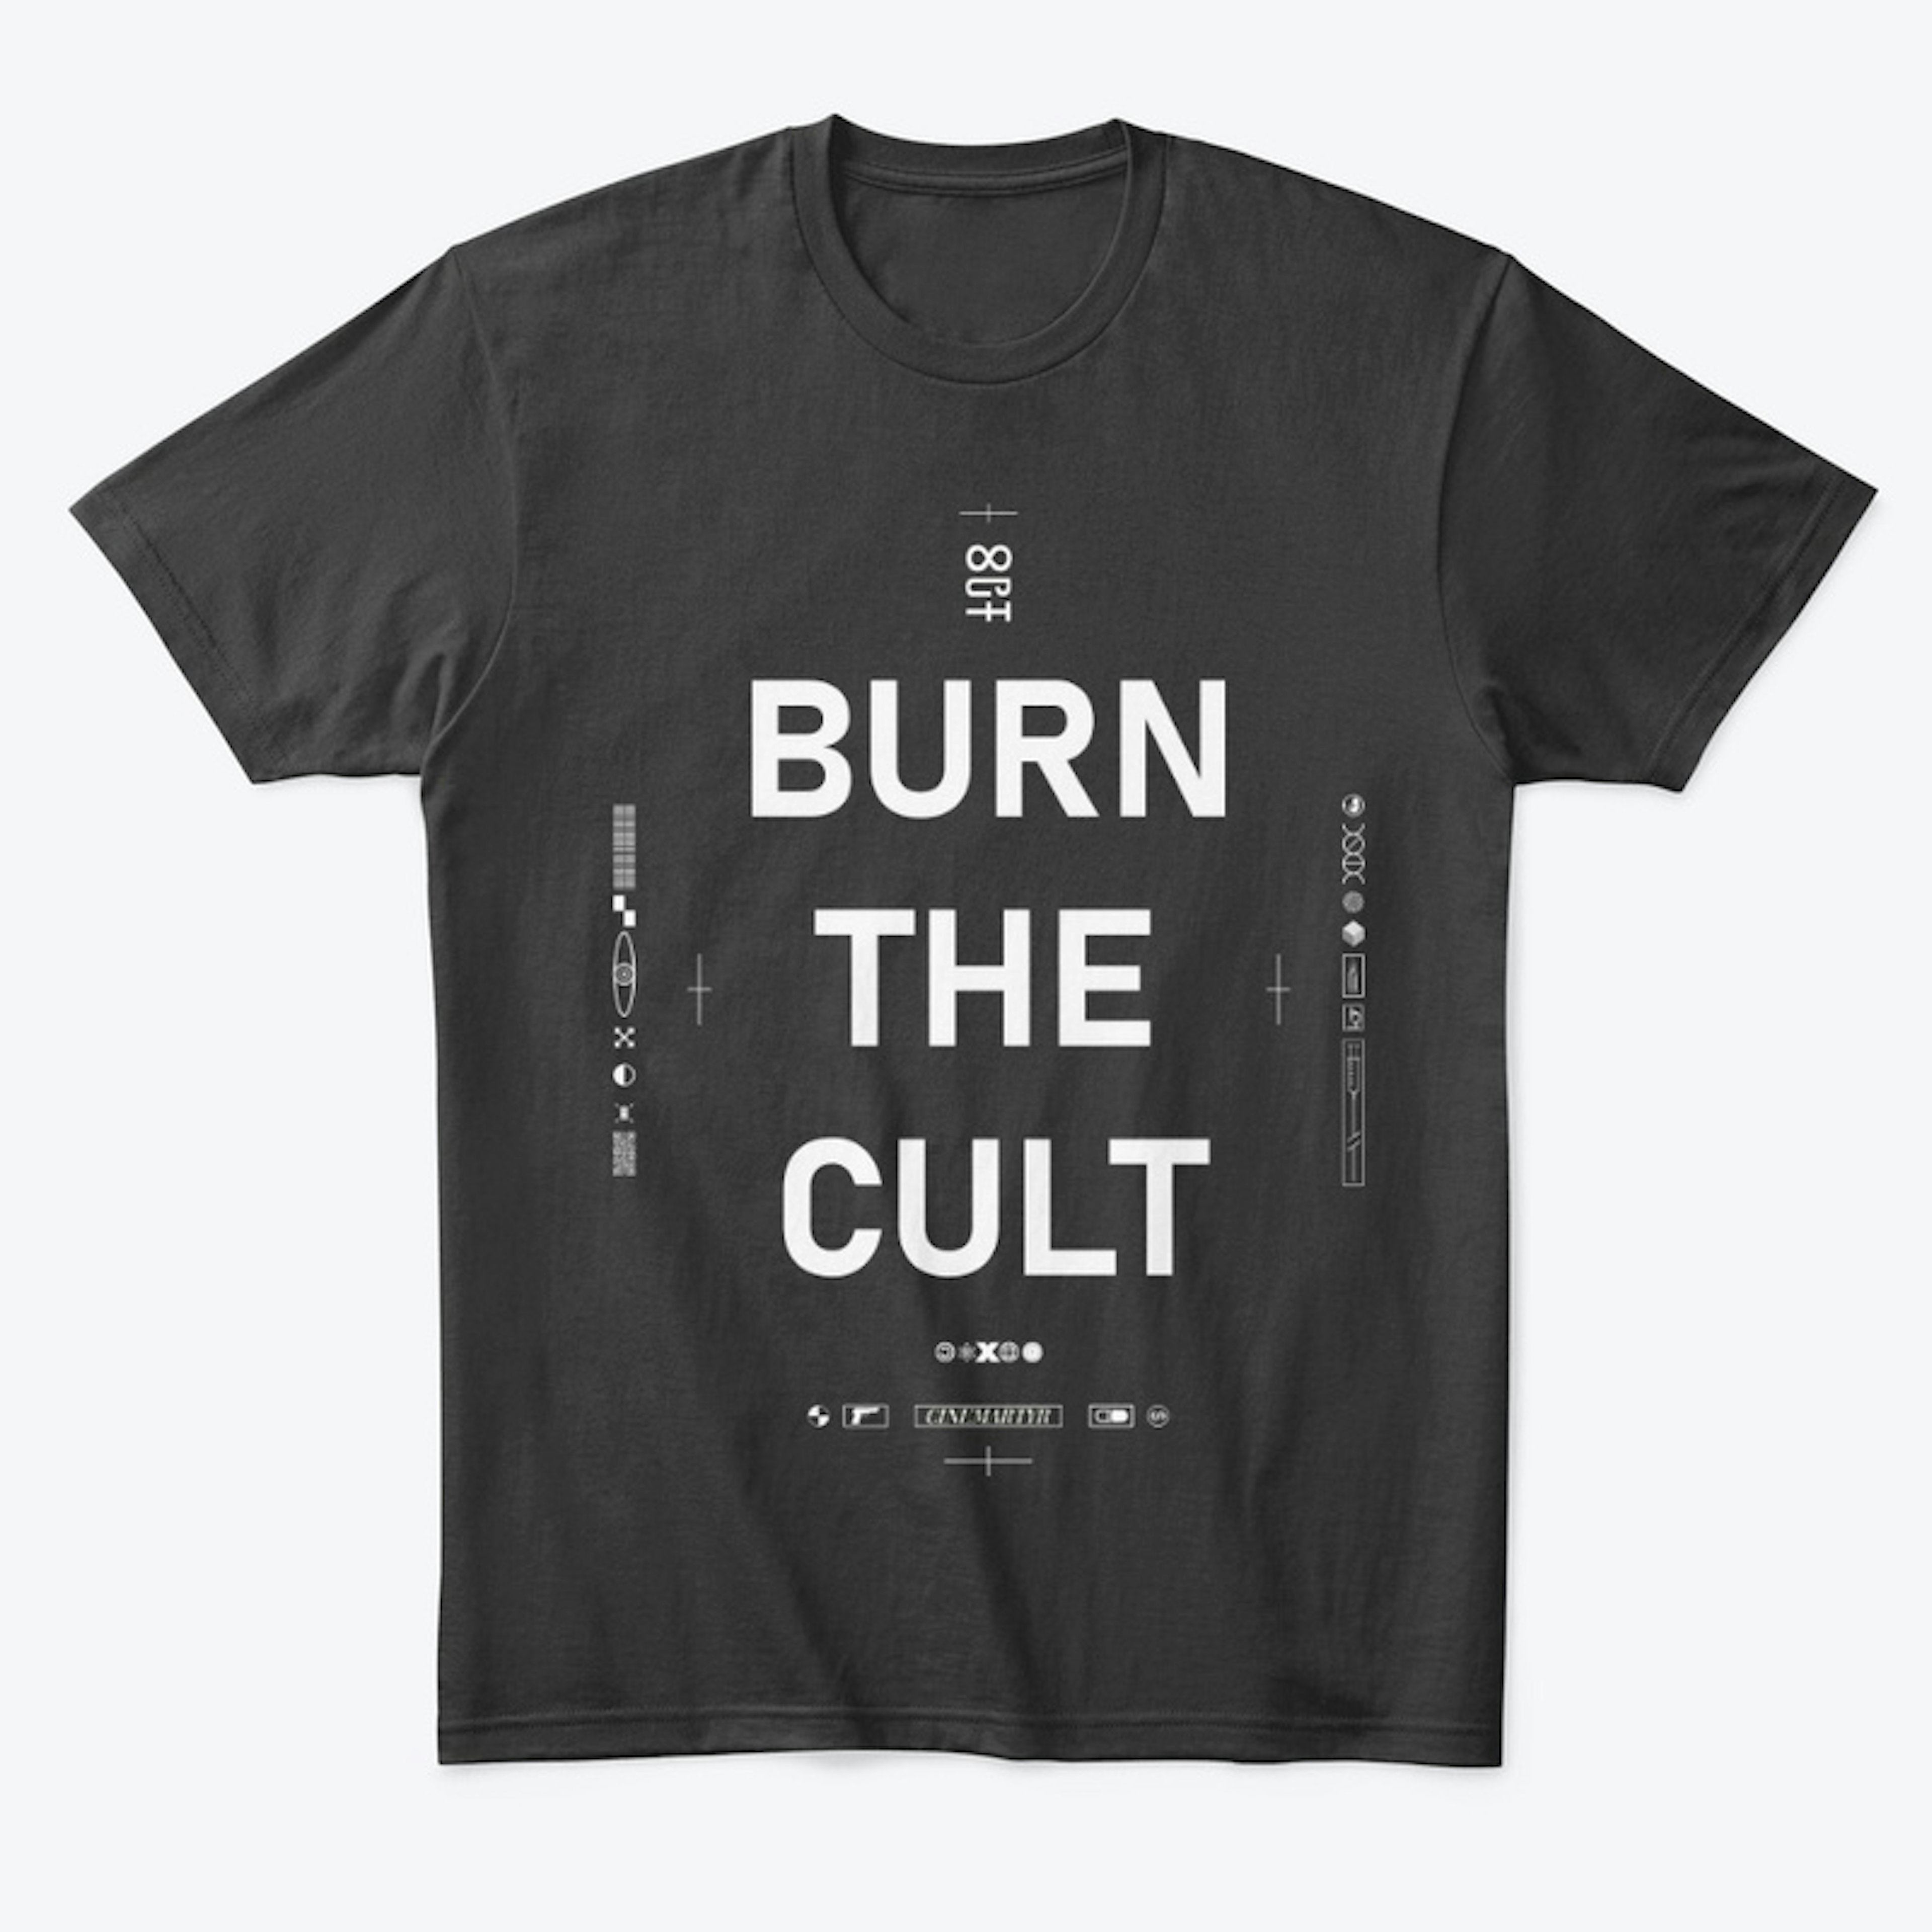 BURN THE CULT (Black)